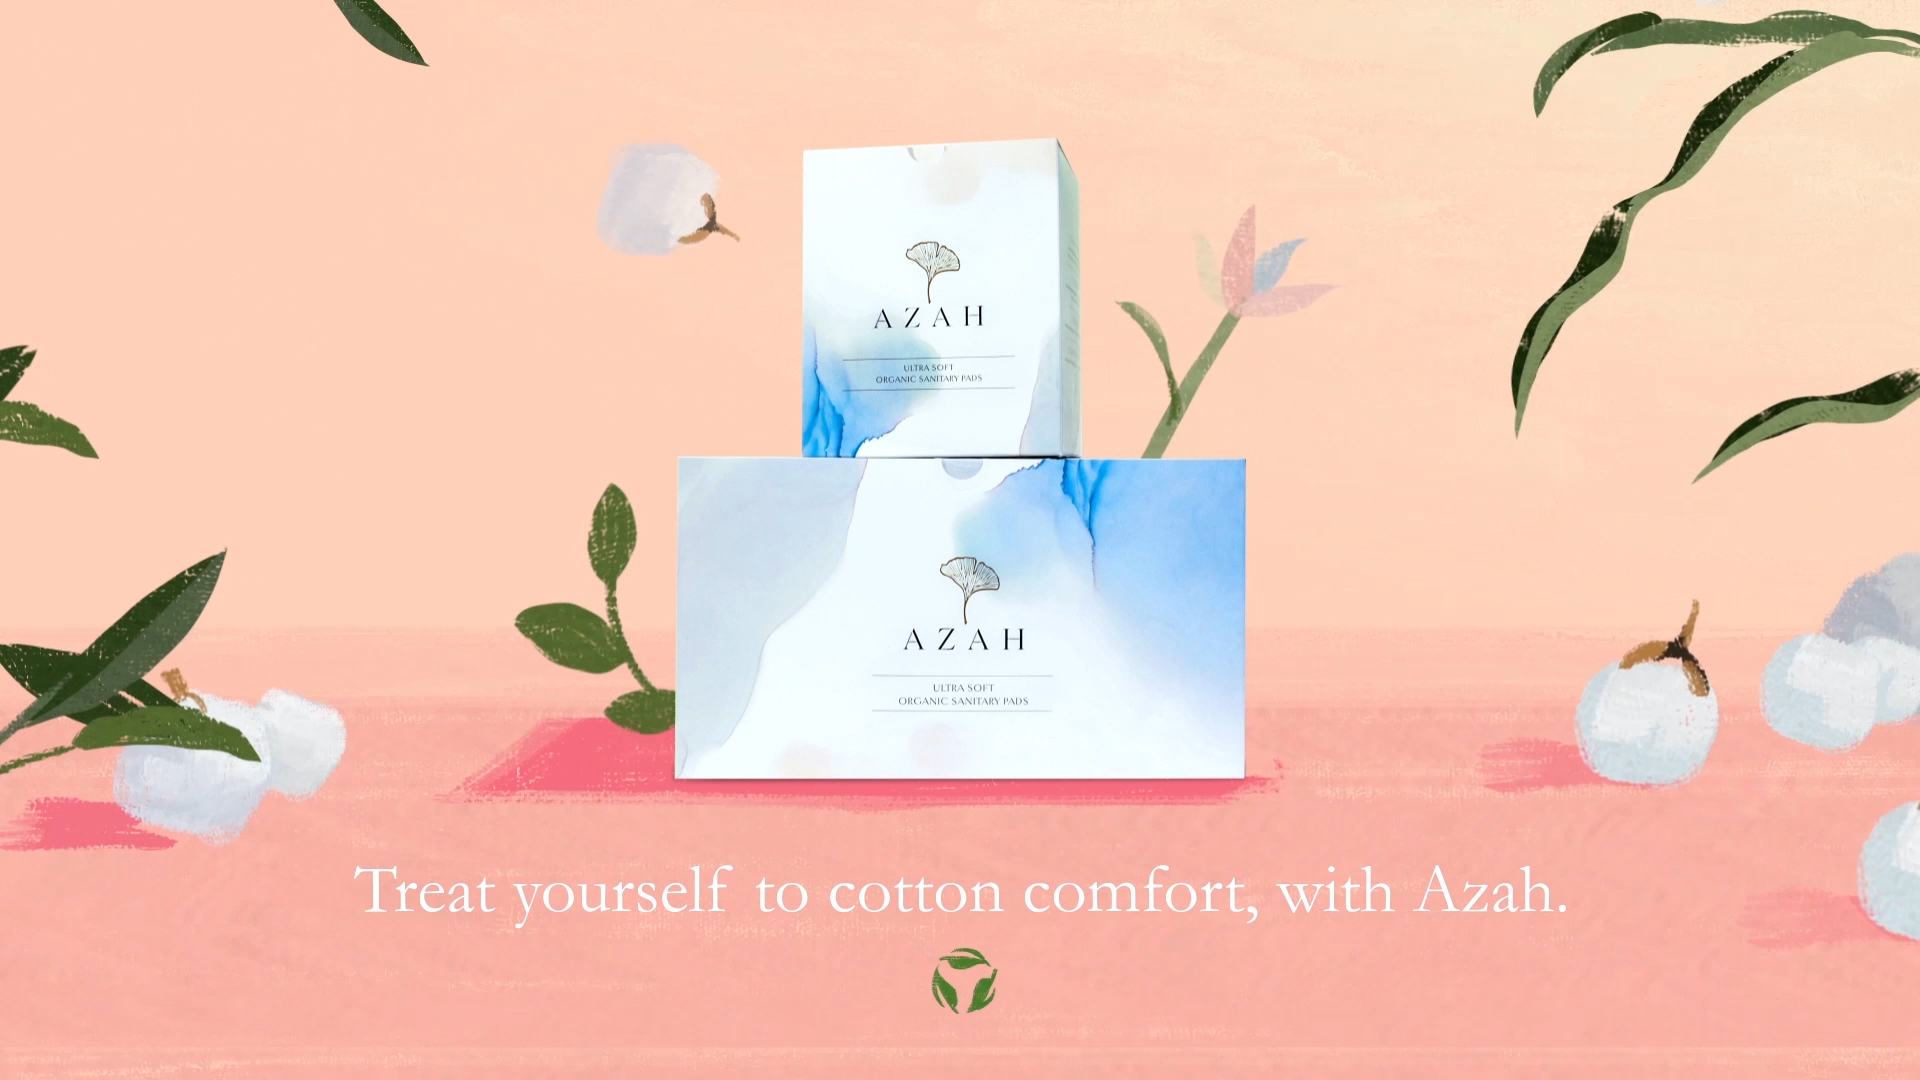 Azah Cotton Comfort Ad